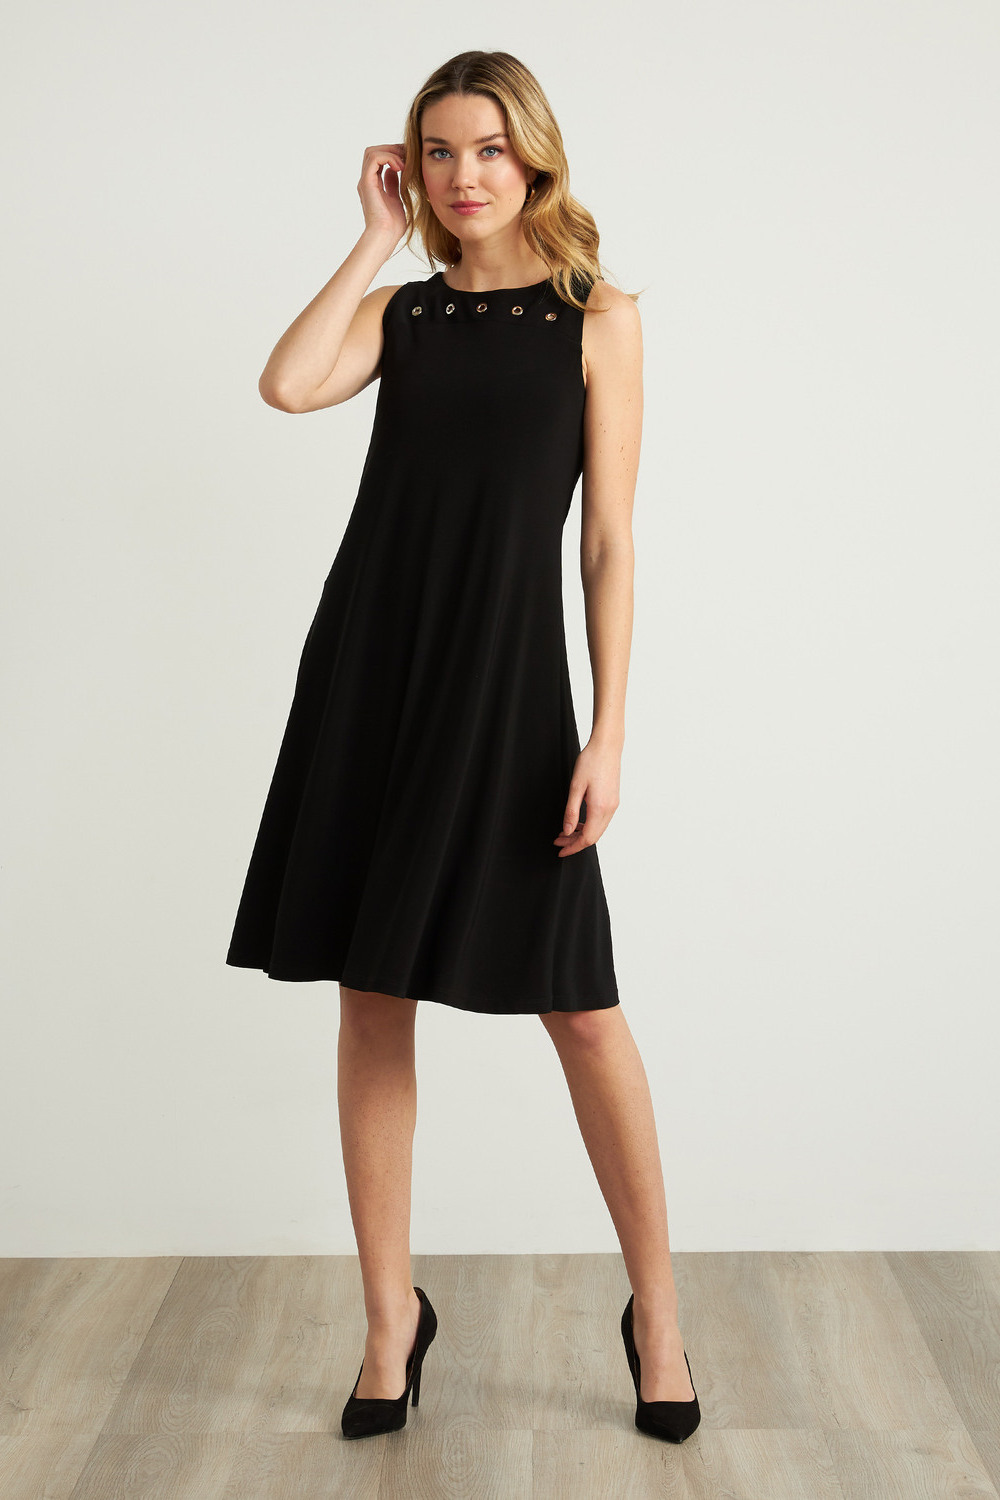 Joseph Ribkoff Grommet Detail A-Line Dress Style 211244. Black